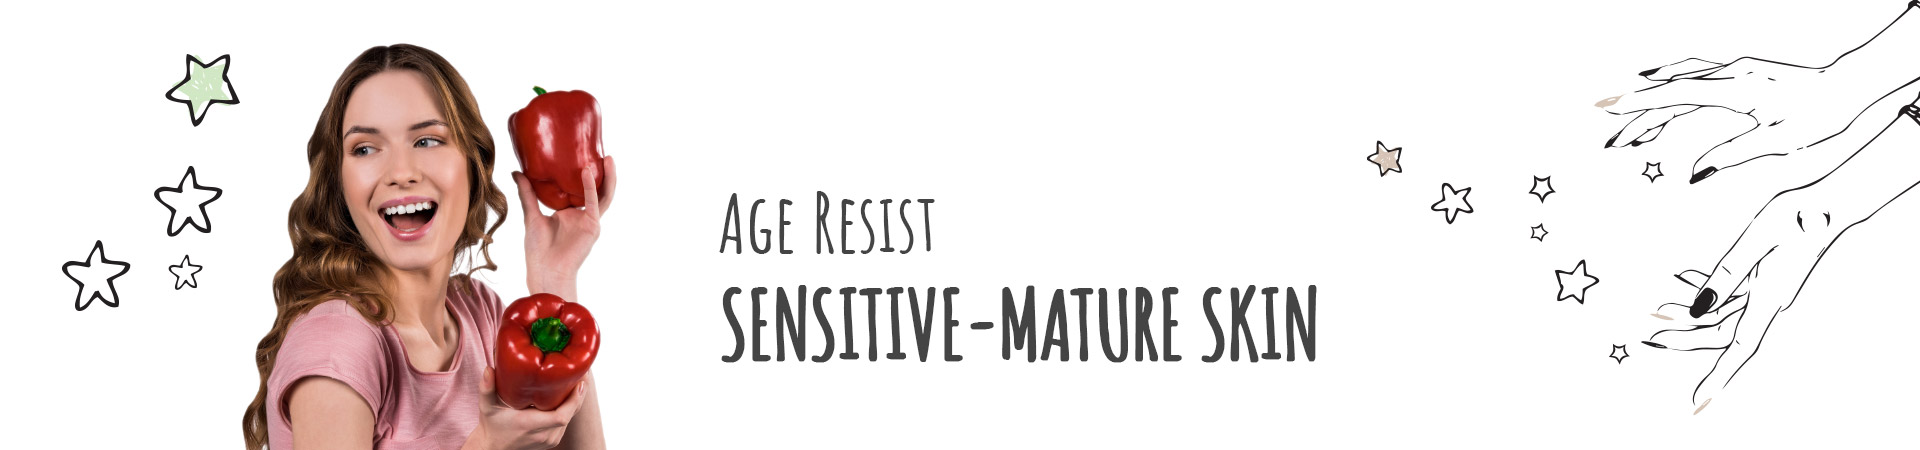 Sensitive-mature skin banner image